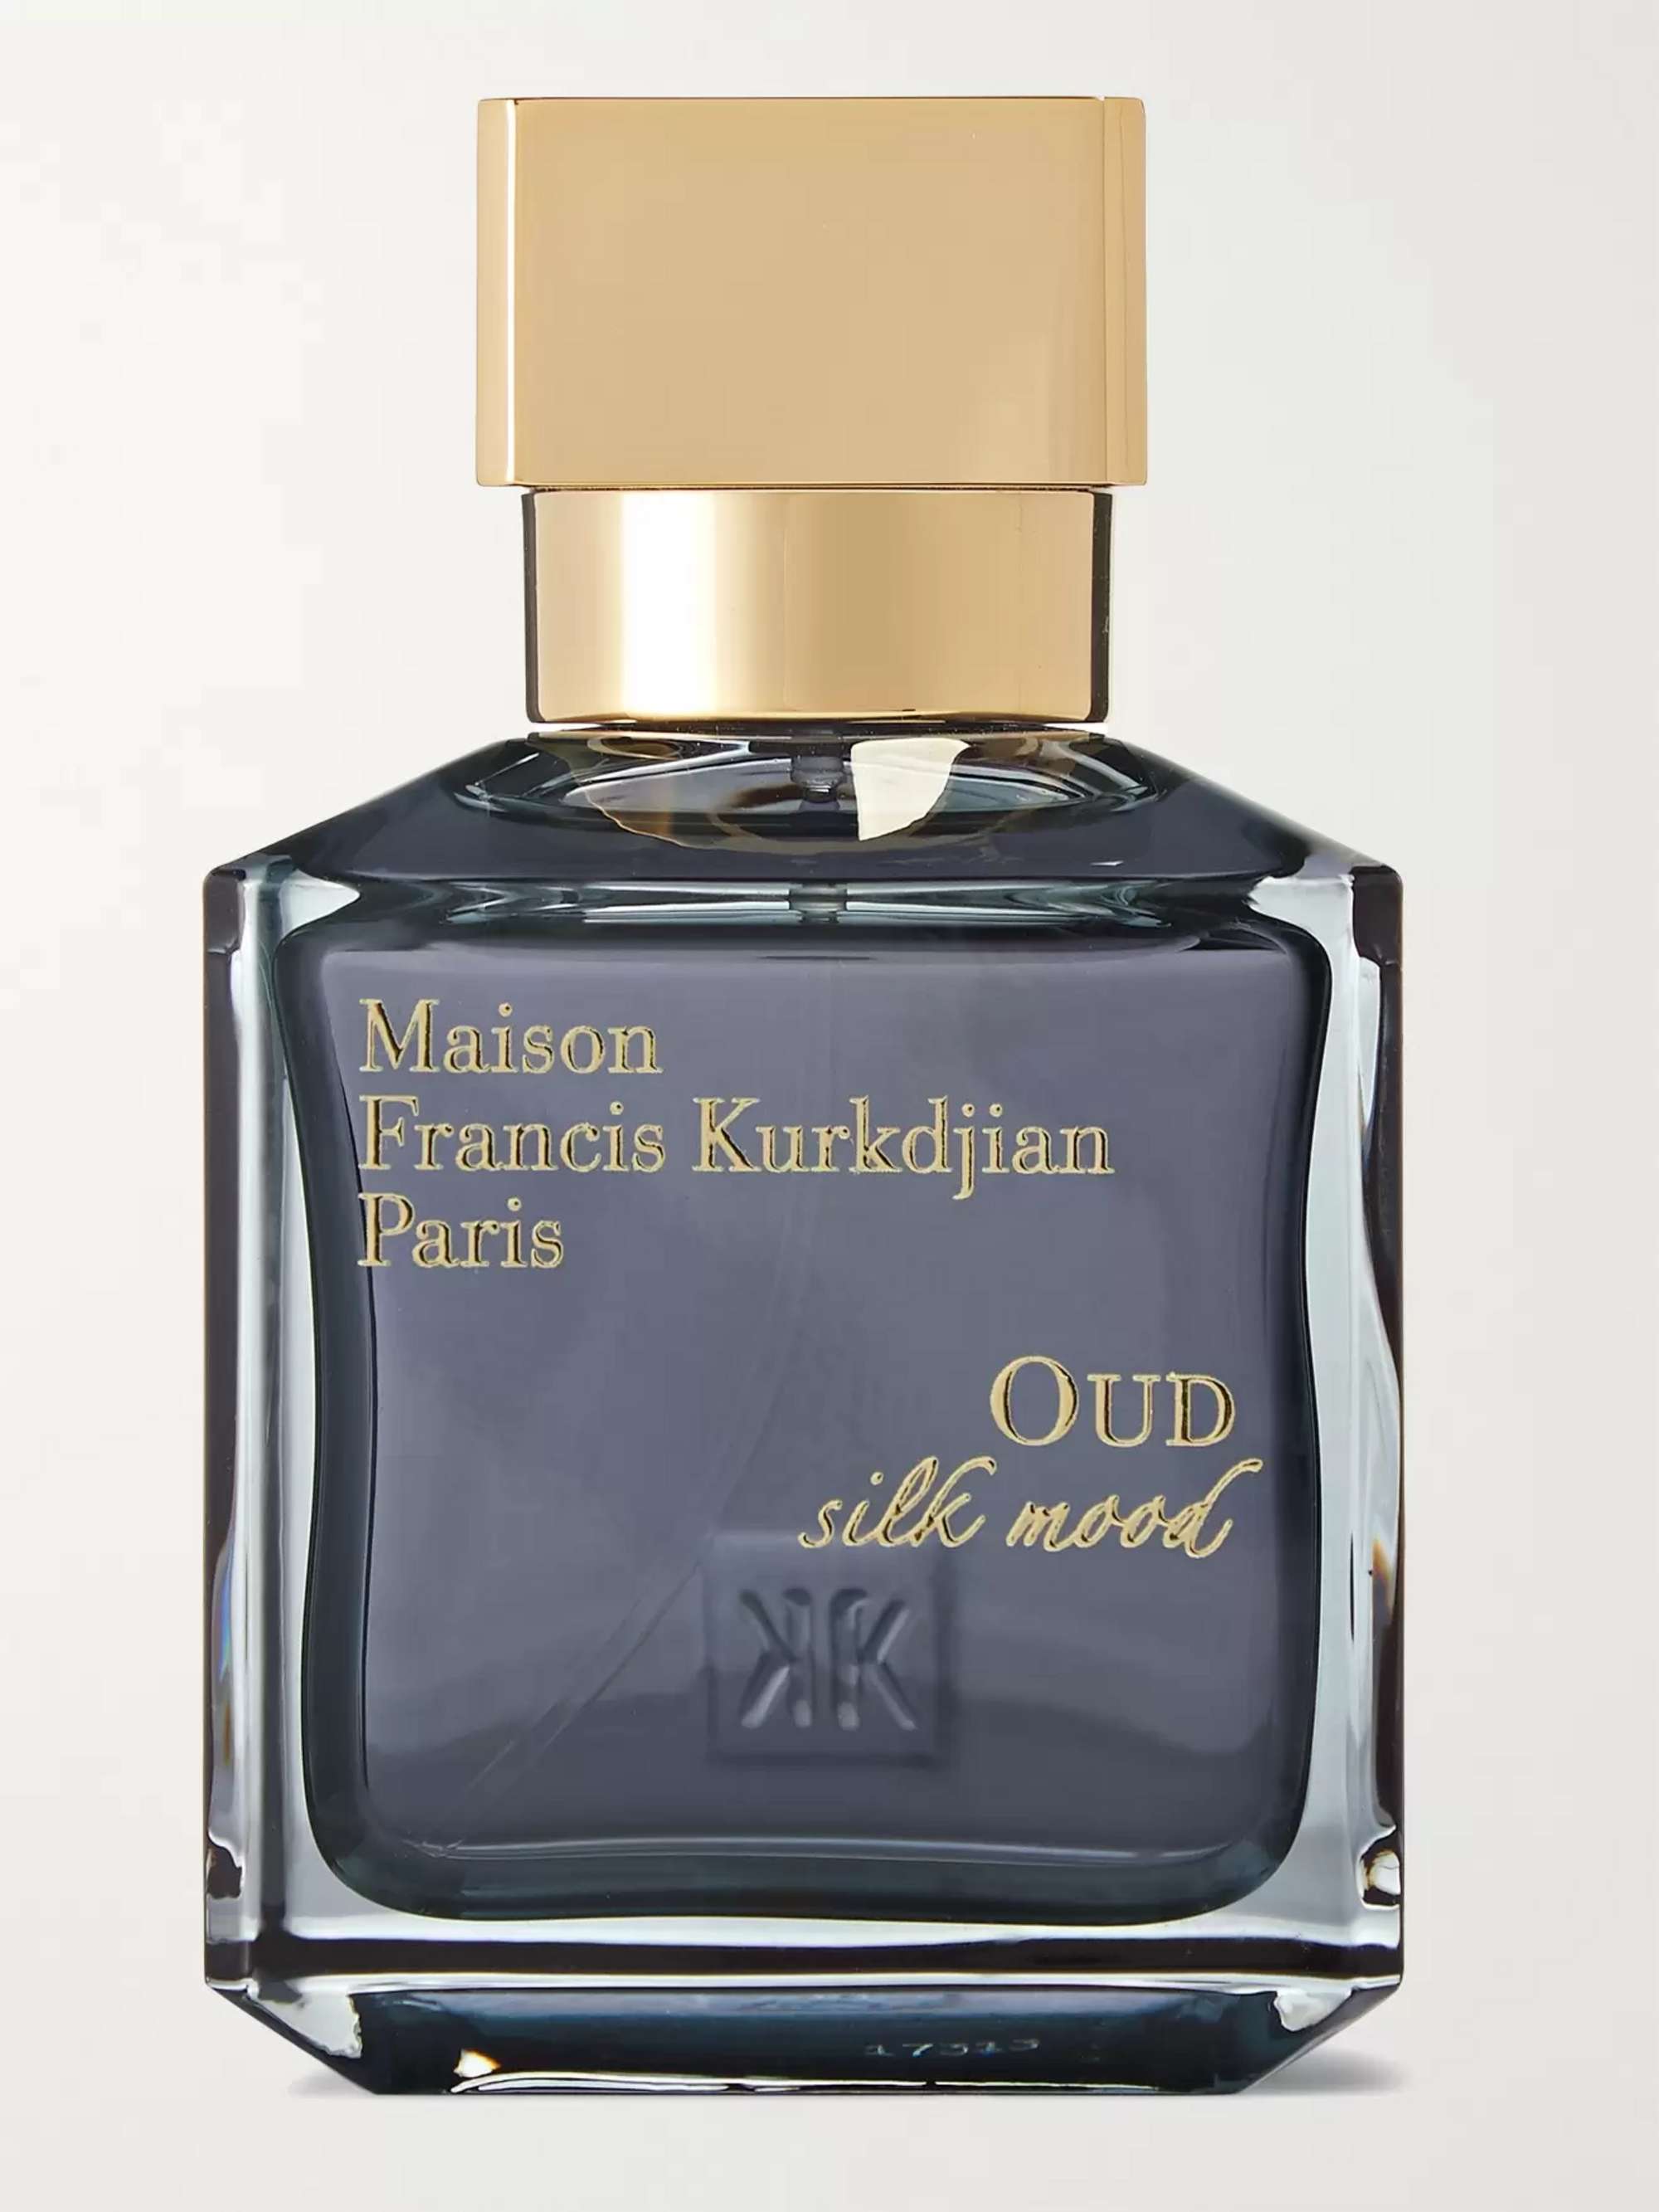 MAISON FRANCIS KURKDJIAN Oud Silk Mood Eau de Parfum, 70ml